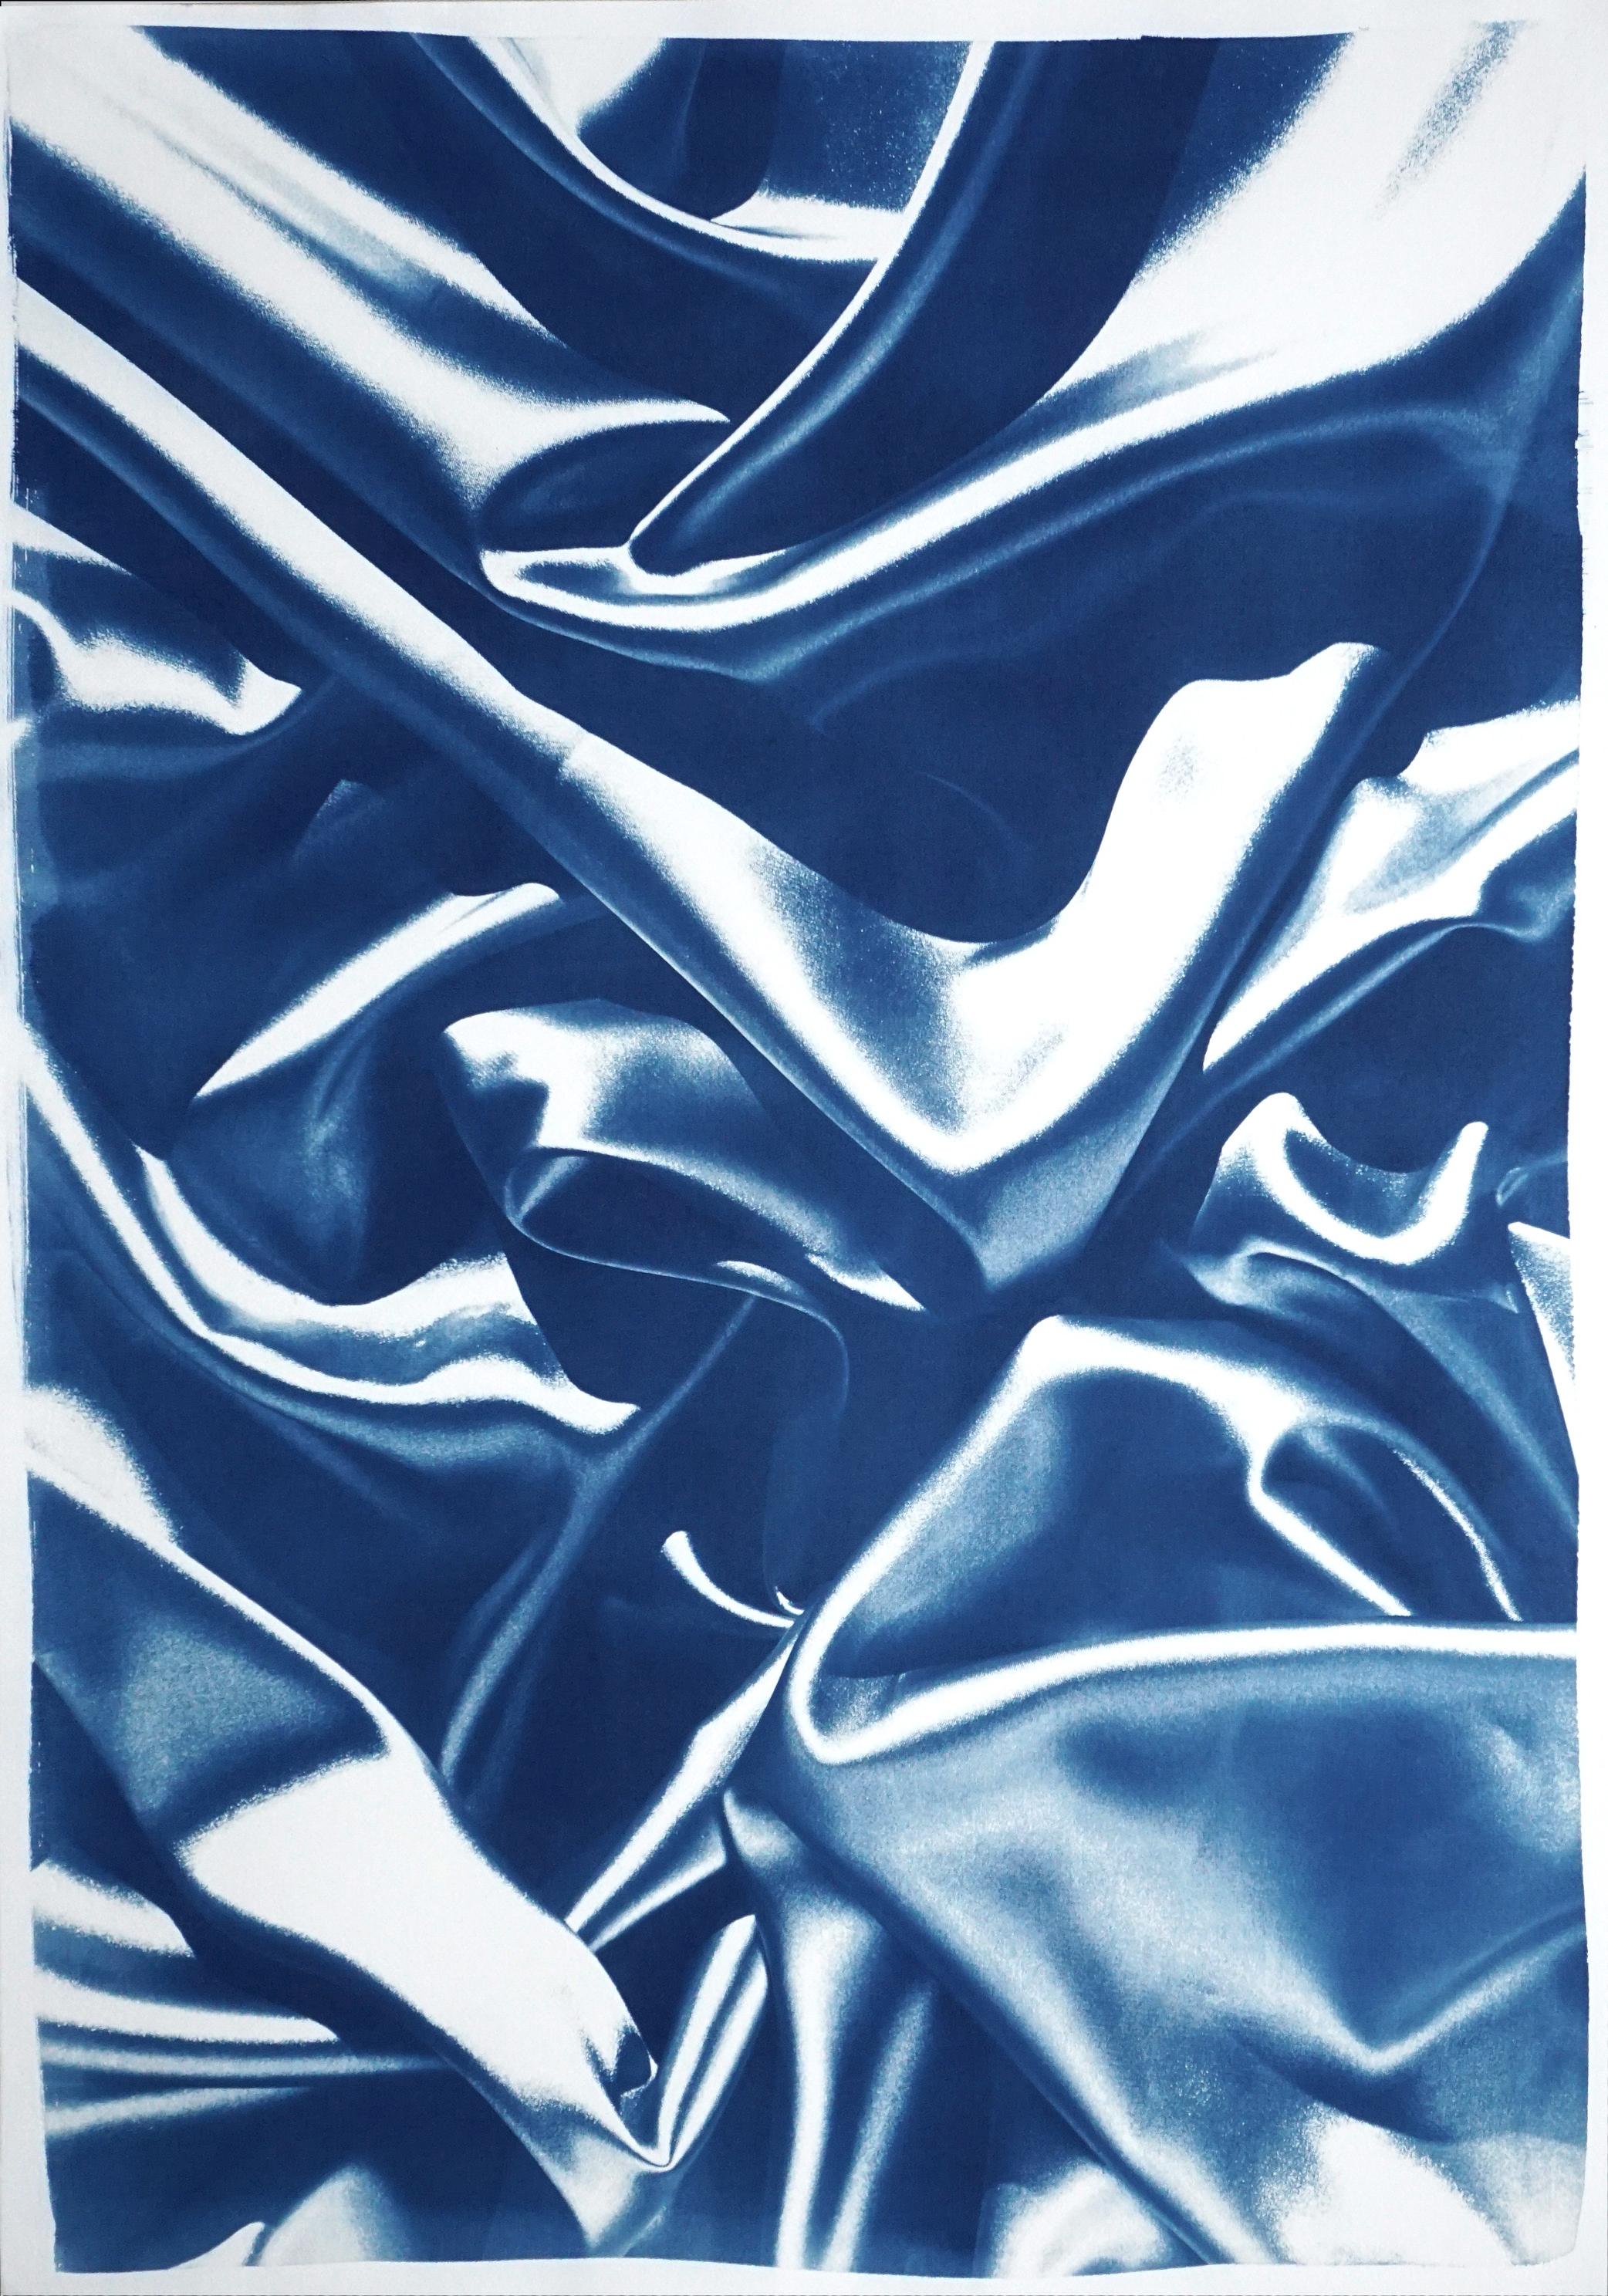 Kind of Cyan Interior Art – Skulpturaler Marmor in klassischem Blau, extra großer Zyanotyp-Druck, Abstrakte Seide 